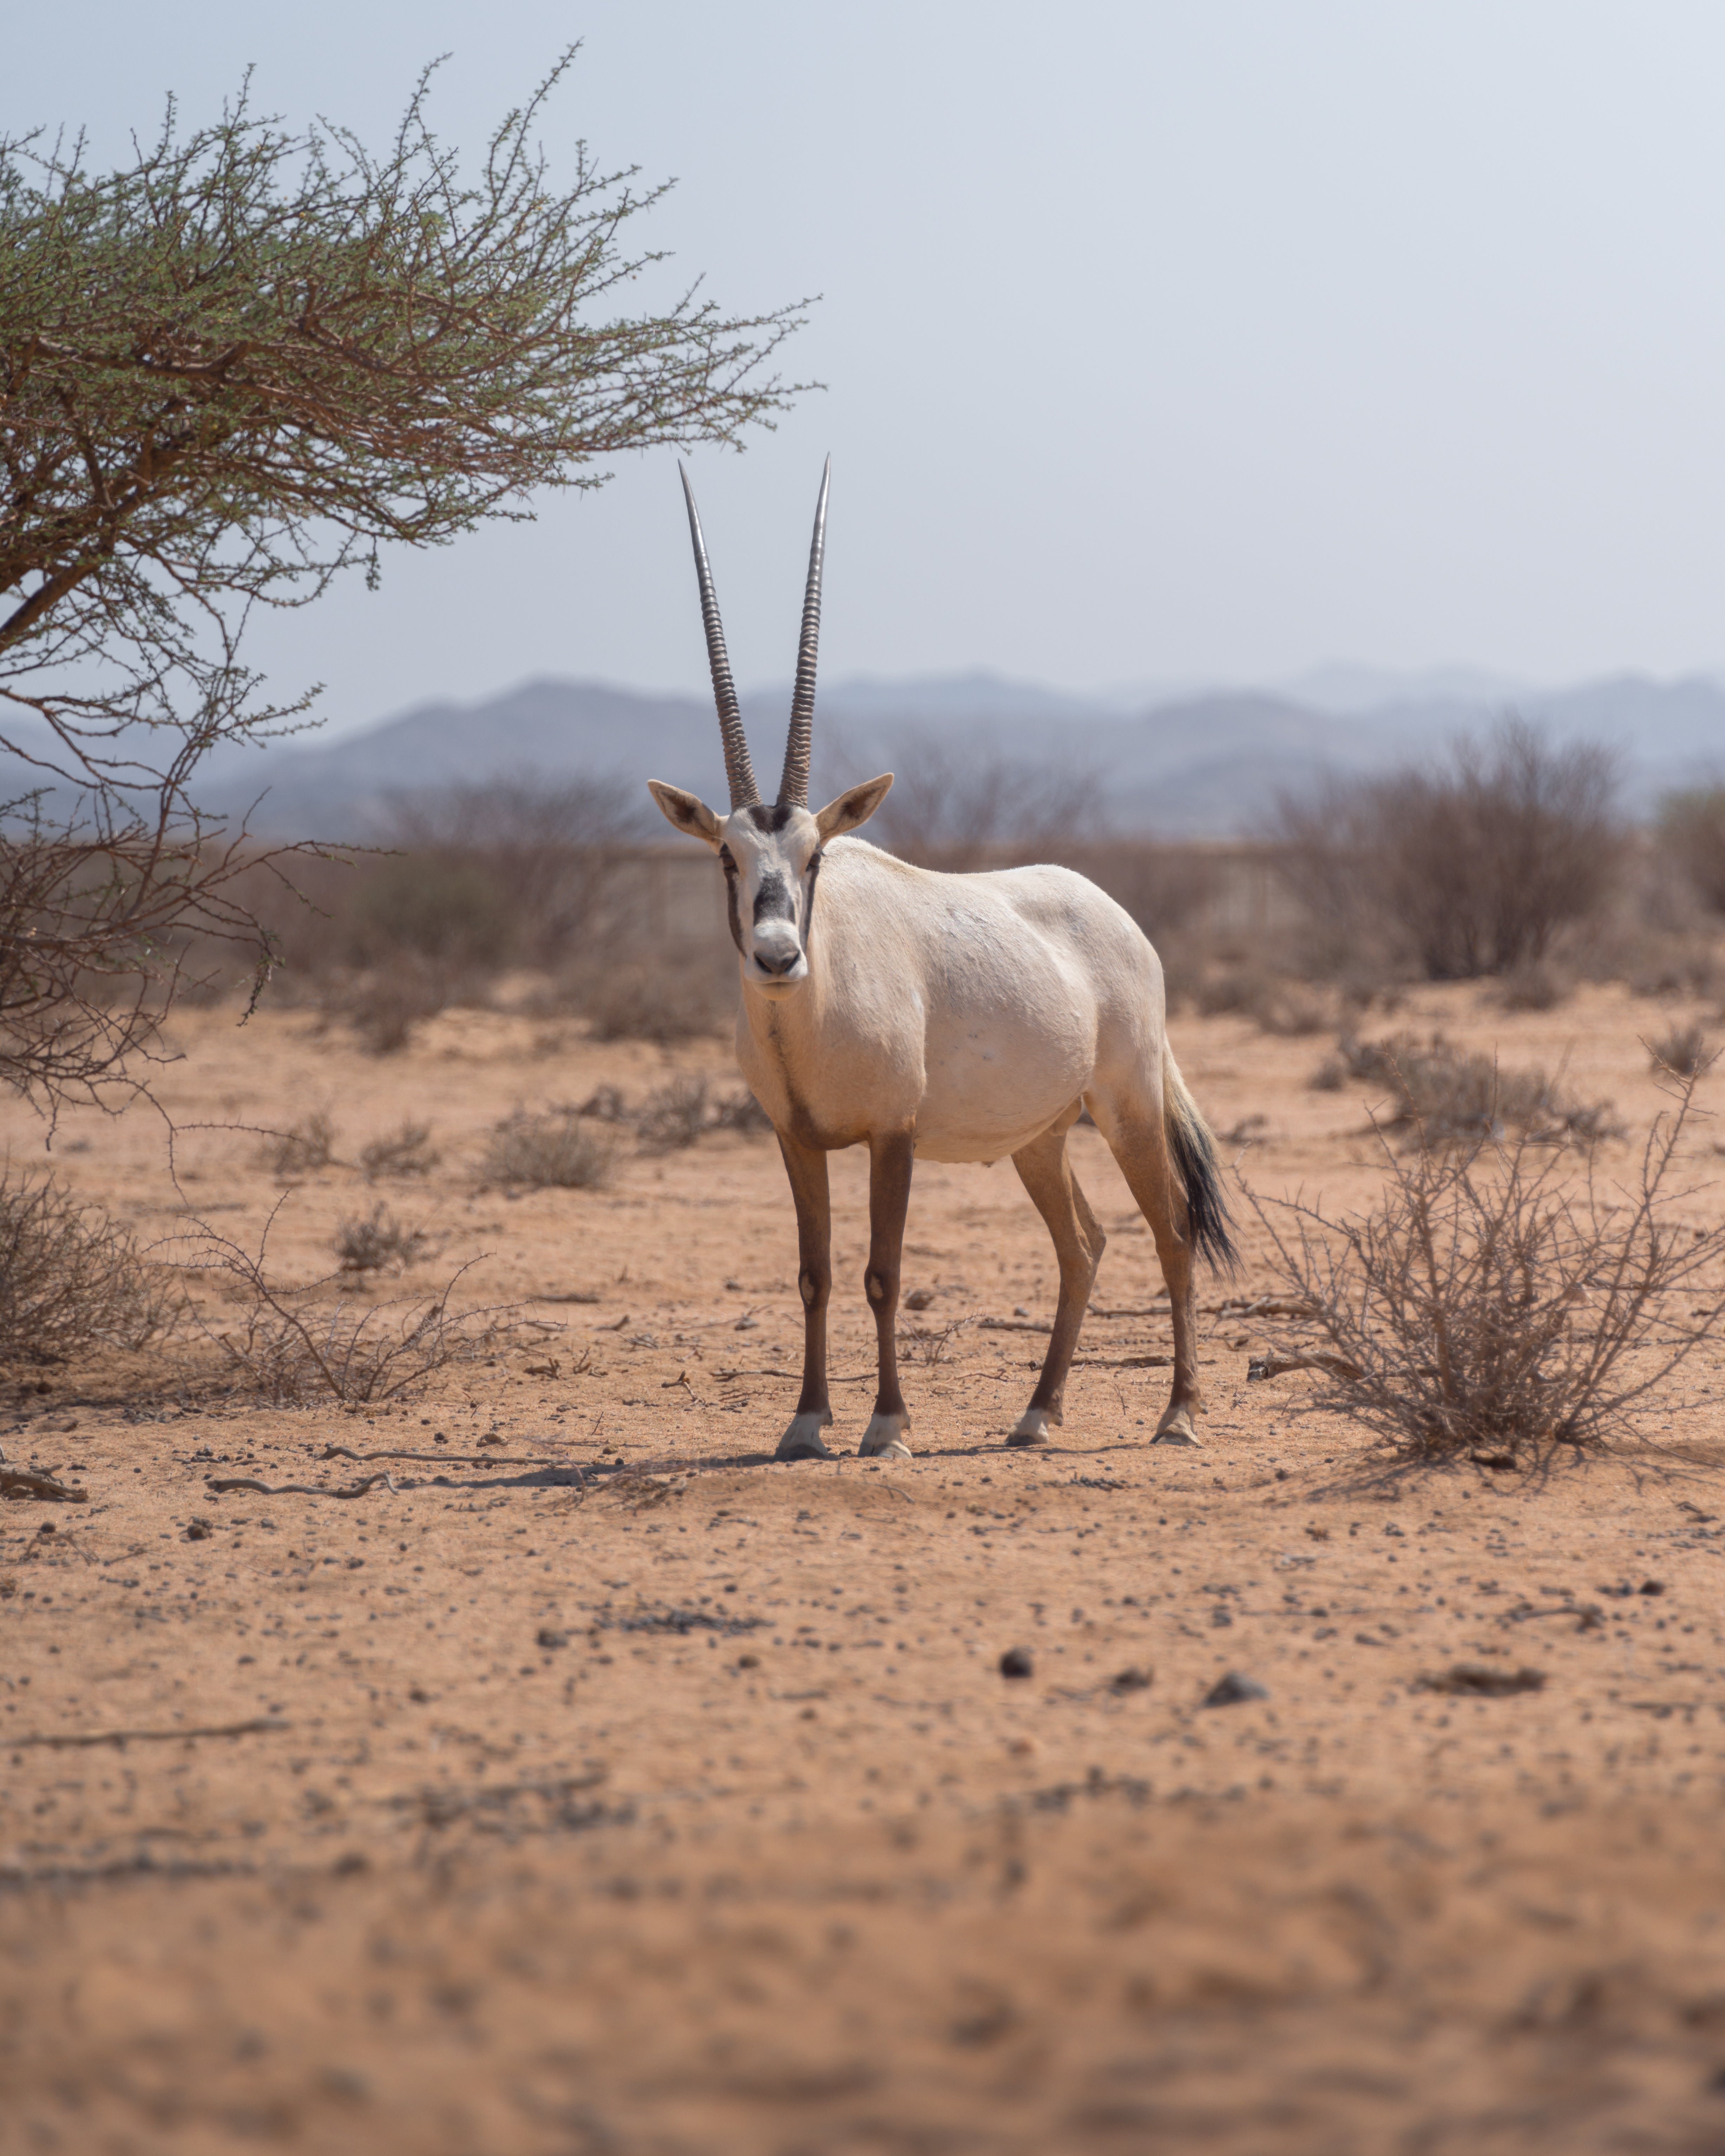 Arabian oryx at National Wildlife Research Centre in Taif, Saudi Arabia